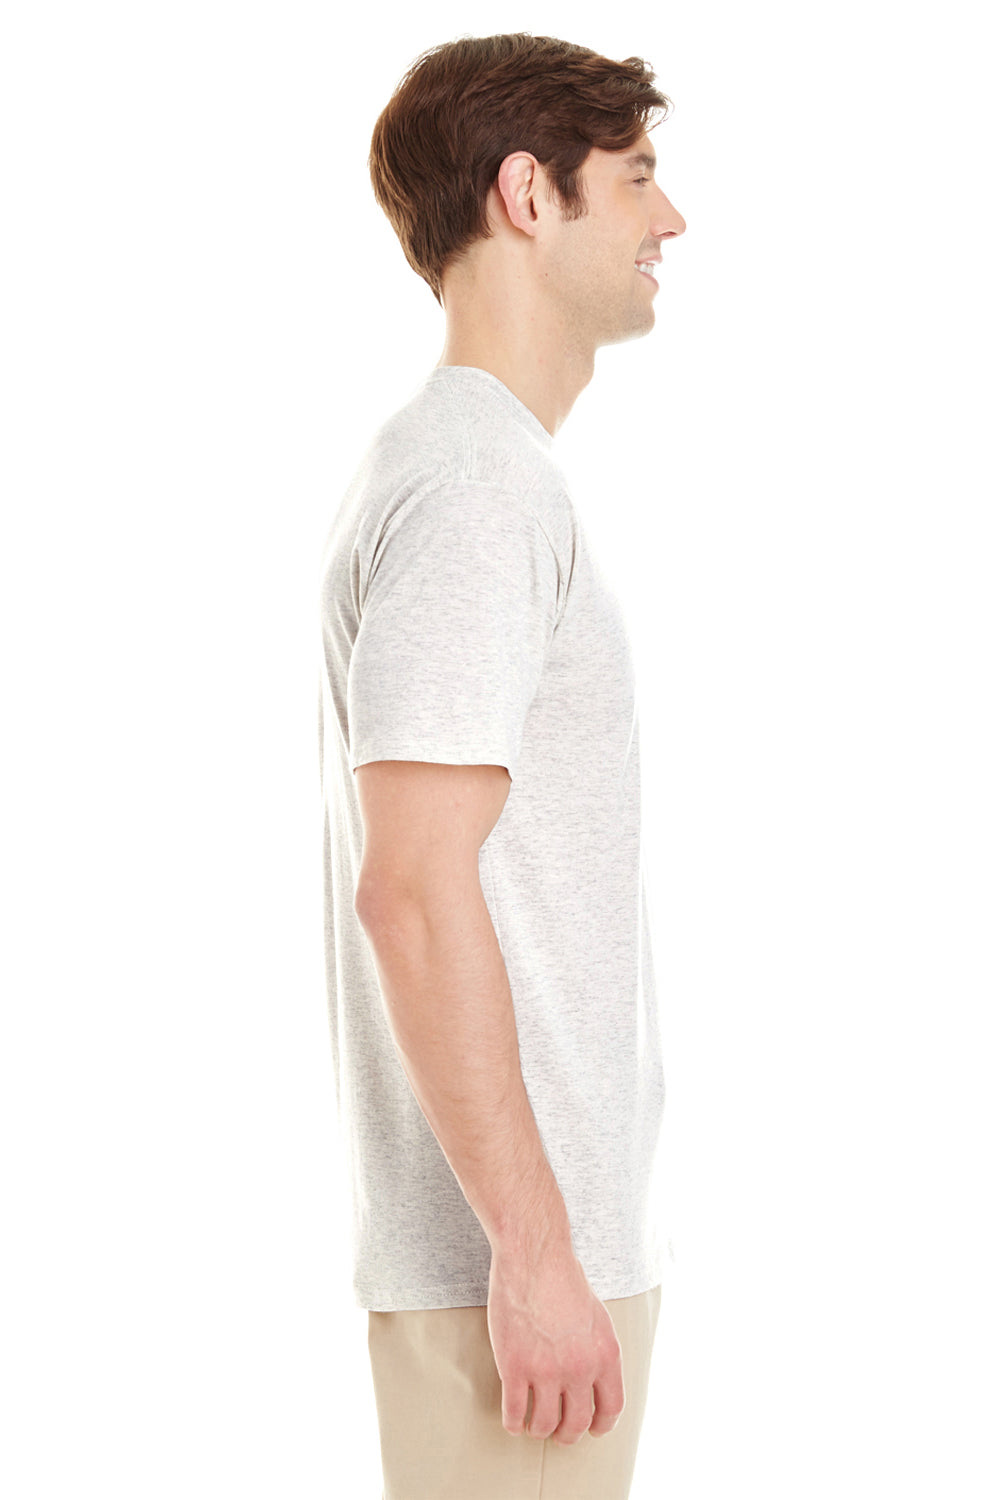 Jerzees 601MR Mens Short Sleeve Crewneck T-Shirt Oatmeal Side